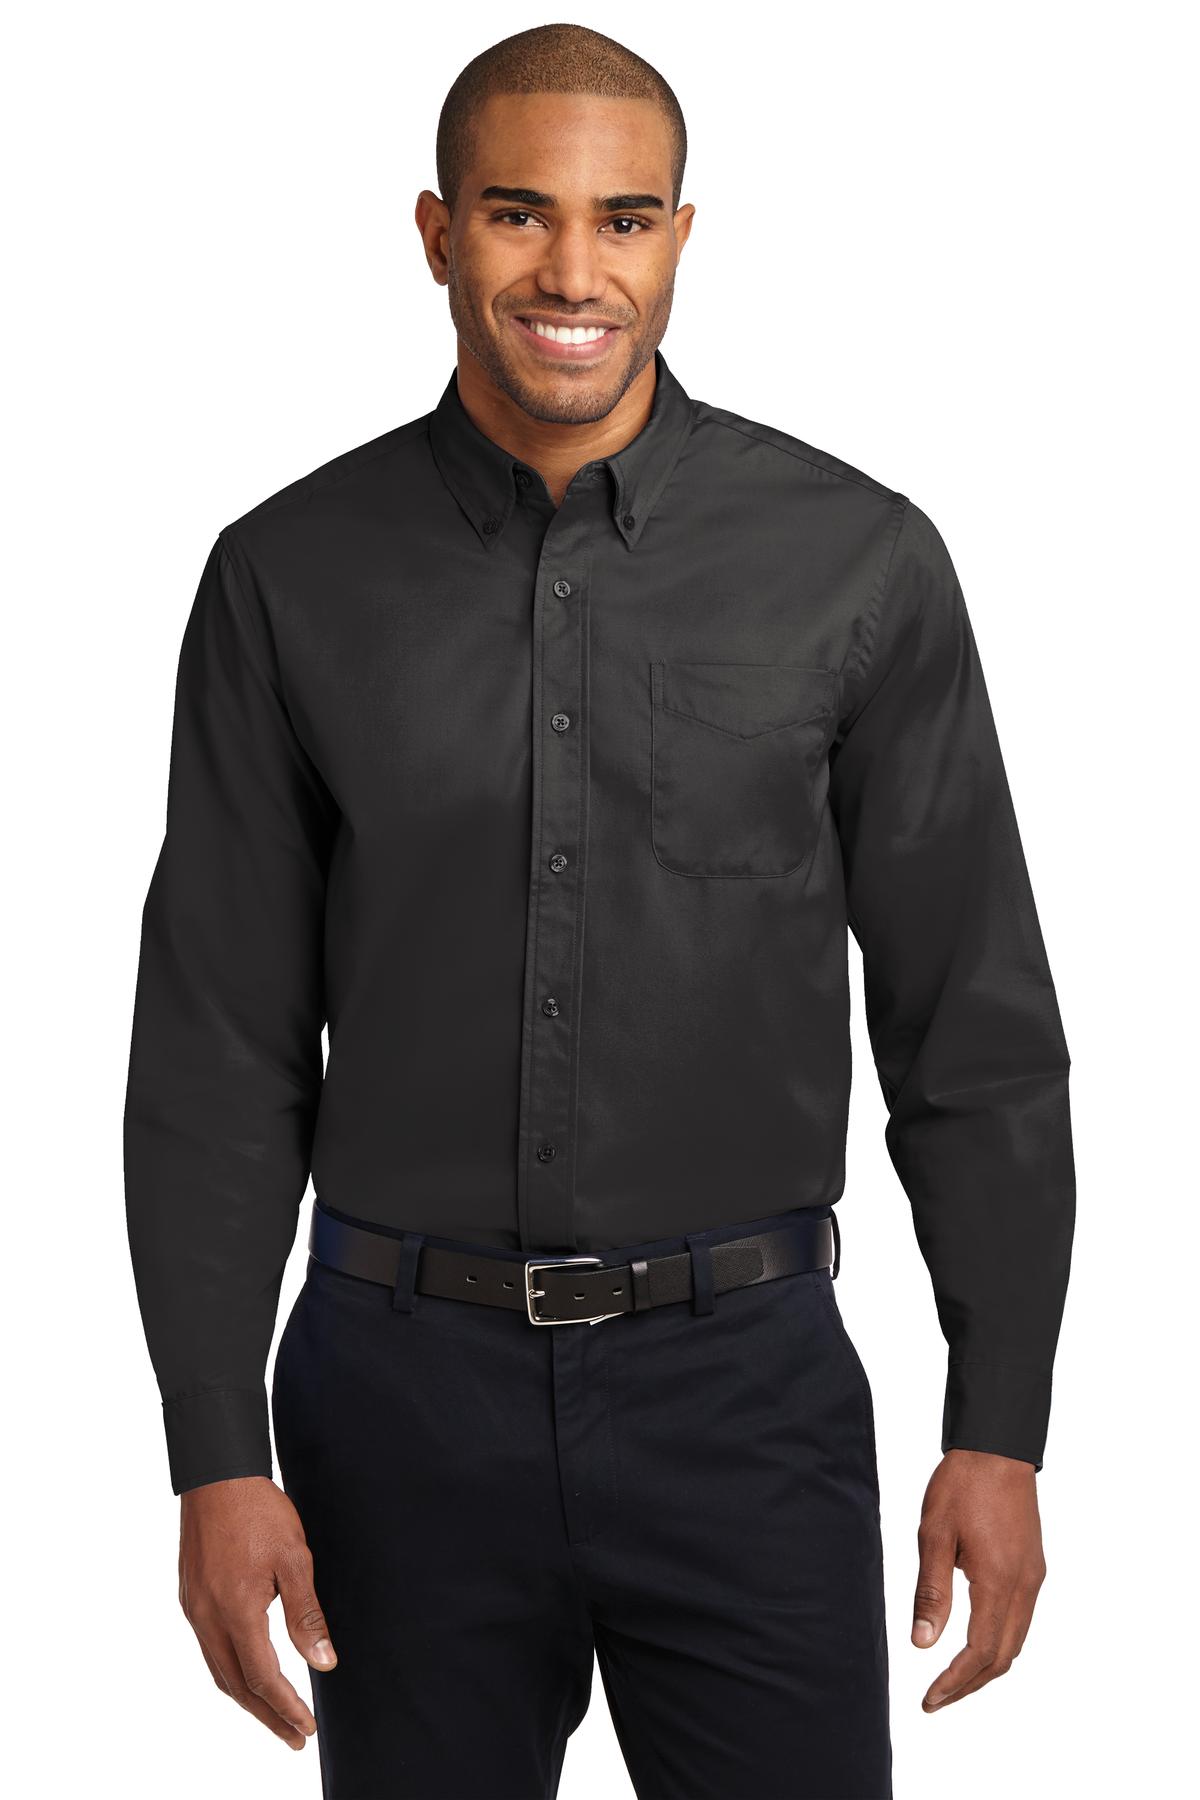 Port Authority® Long Sleeve Easy Care Shirt.-Port Authority